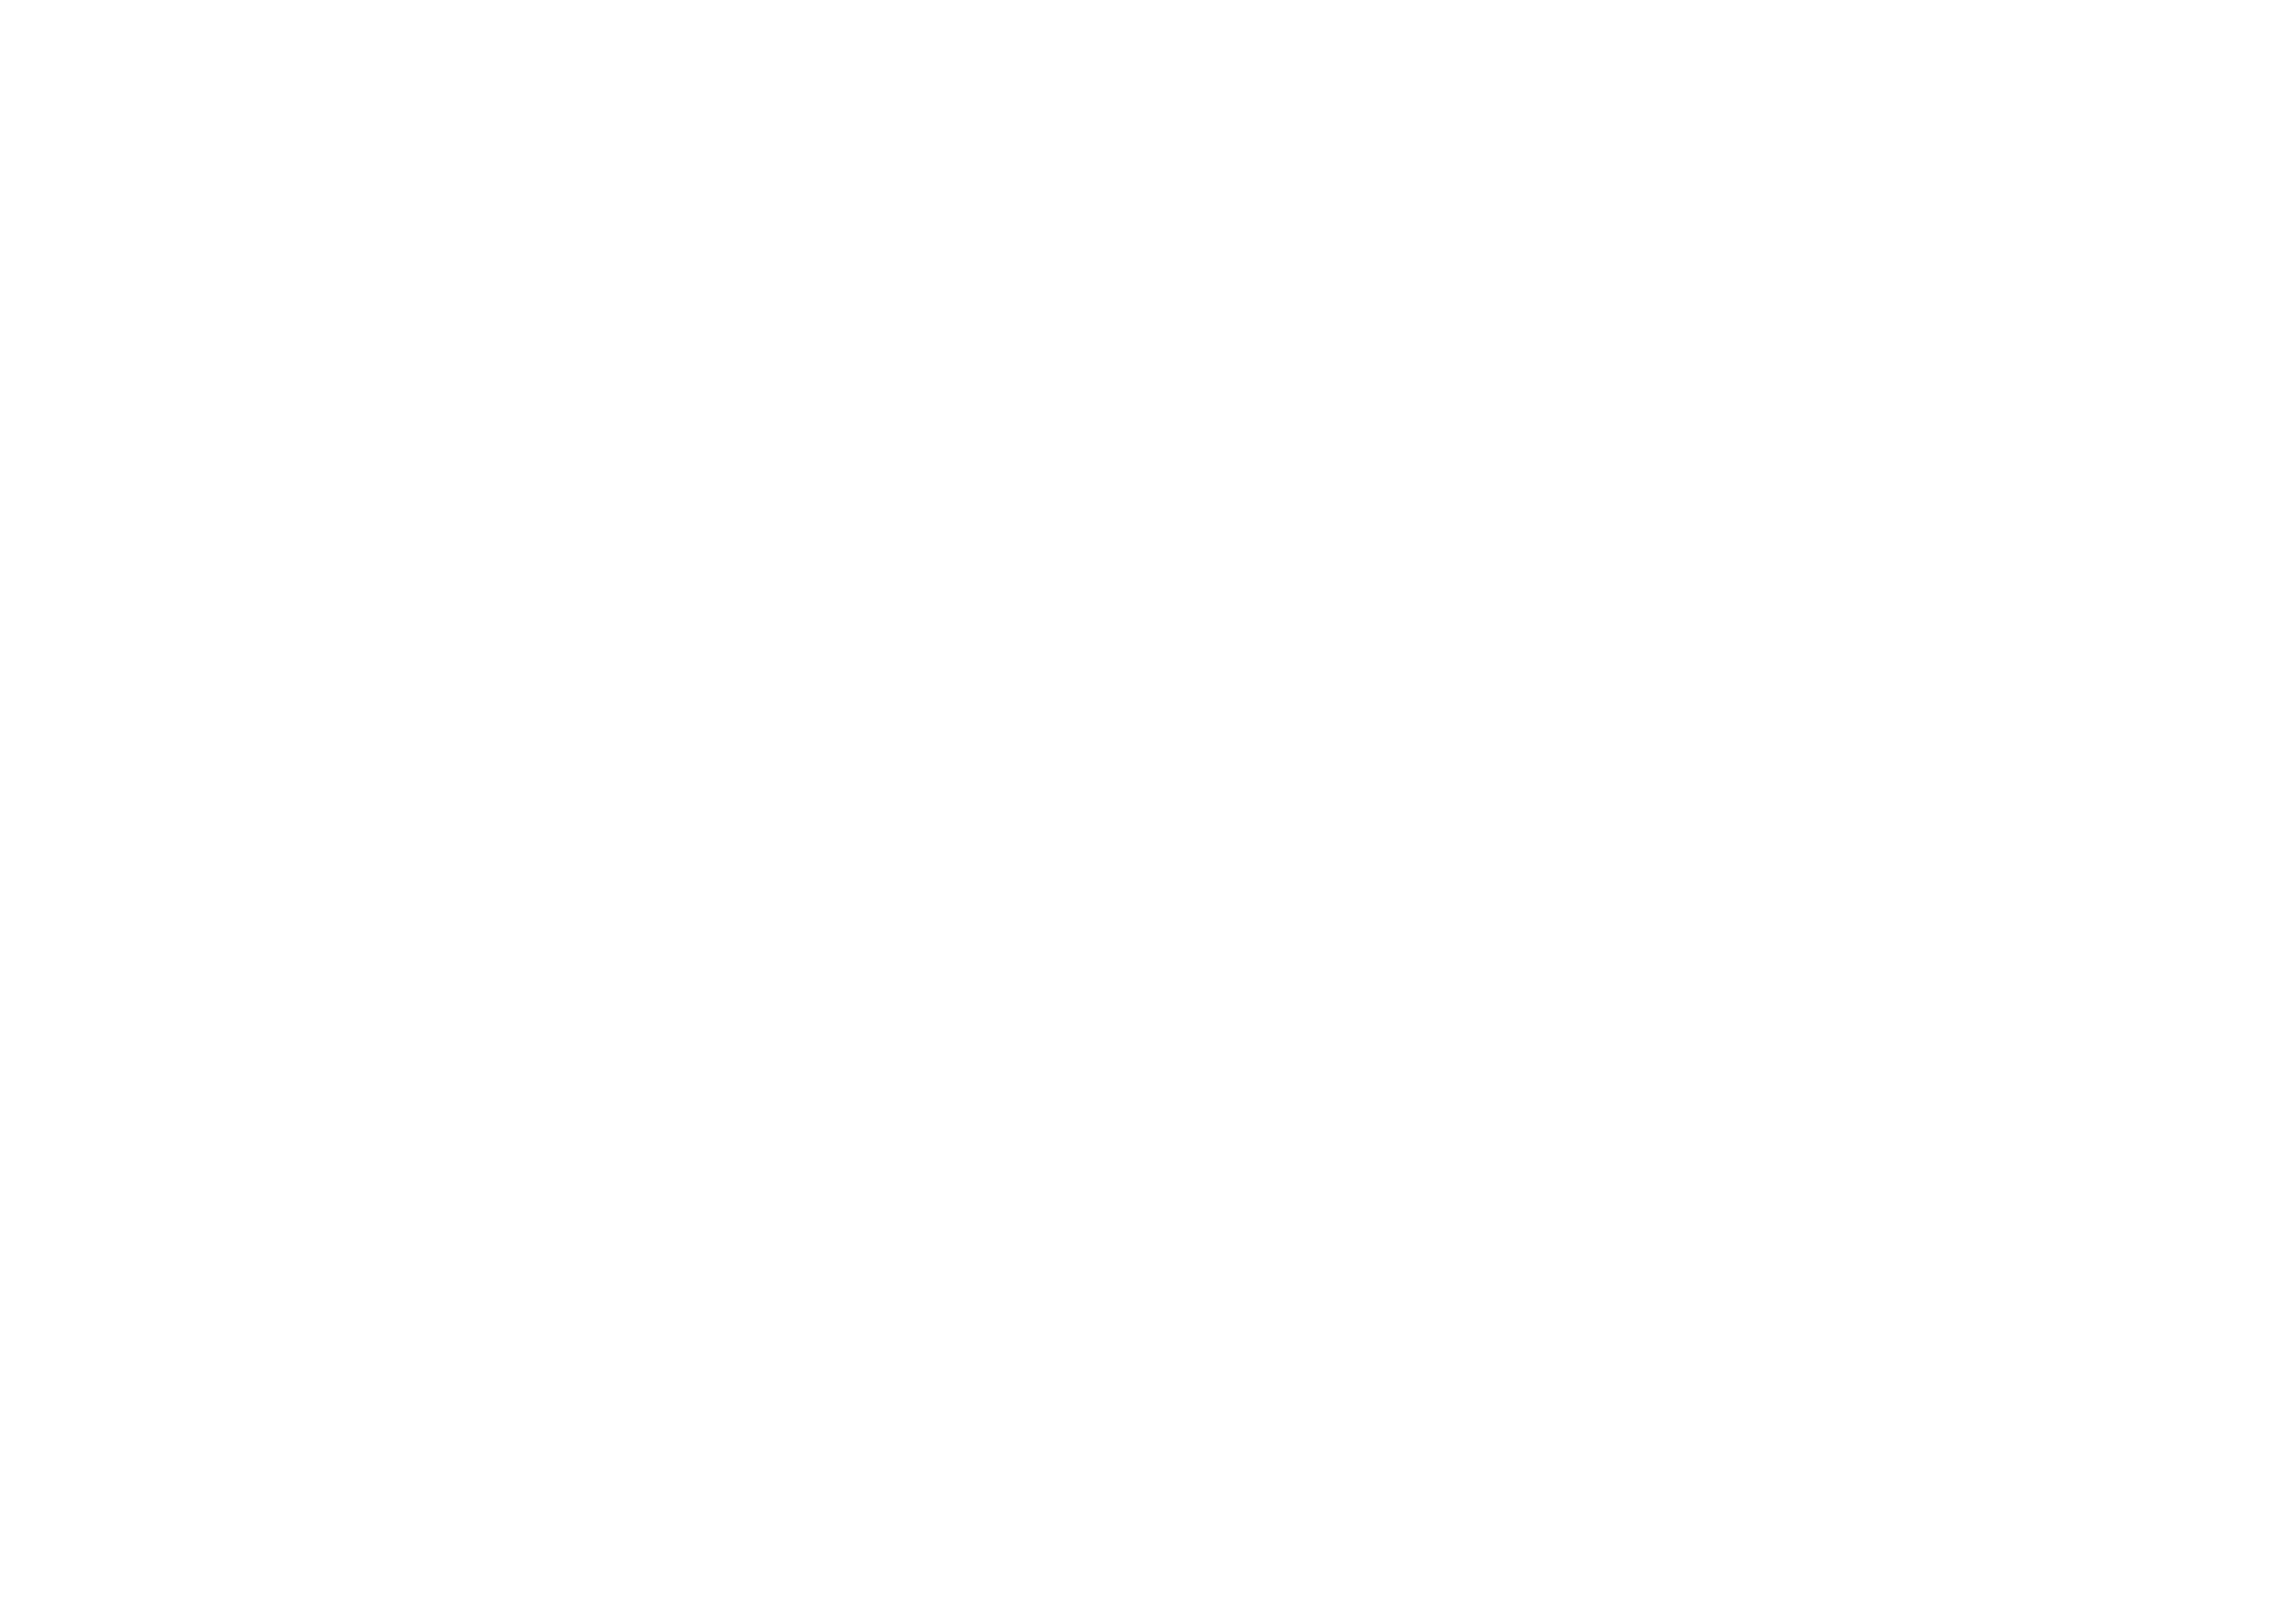 The Little Green Wedding Barn